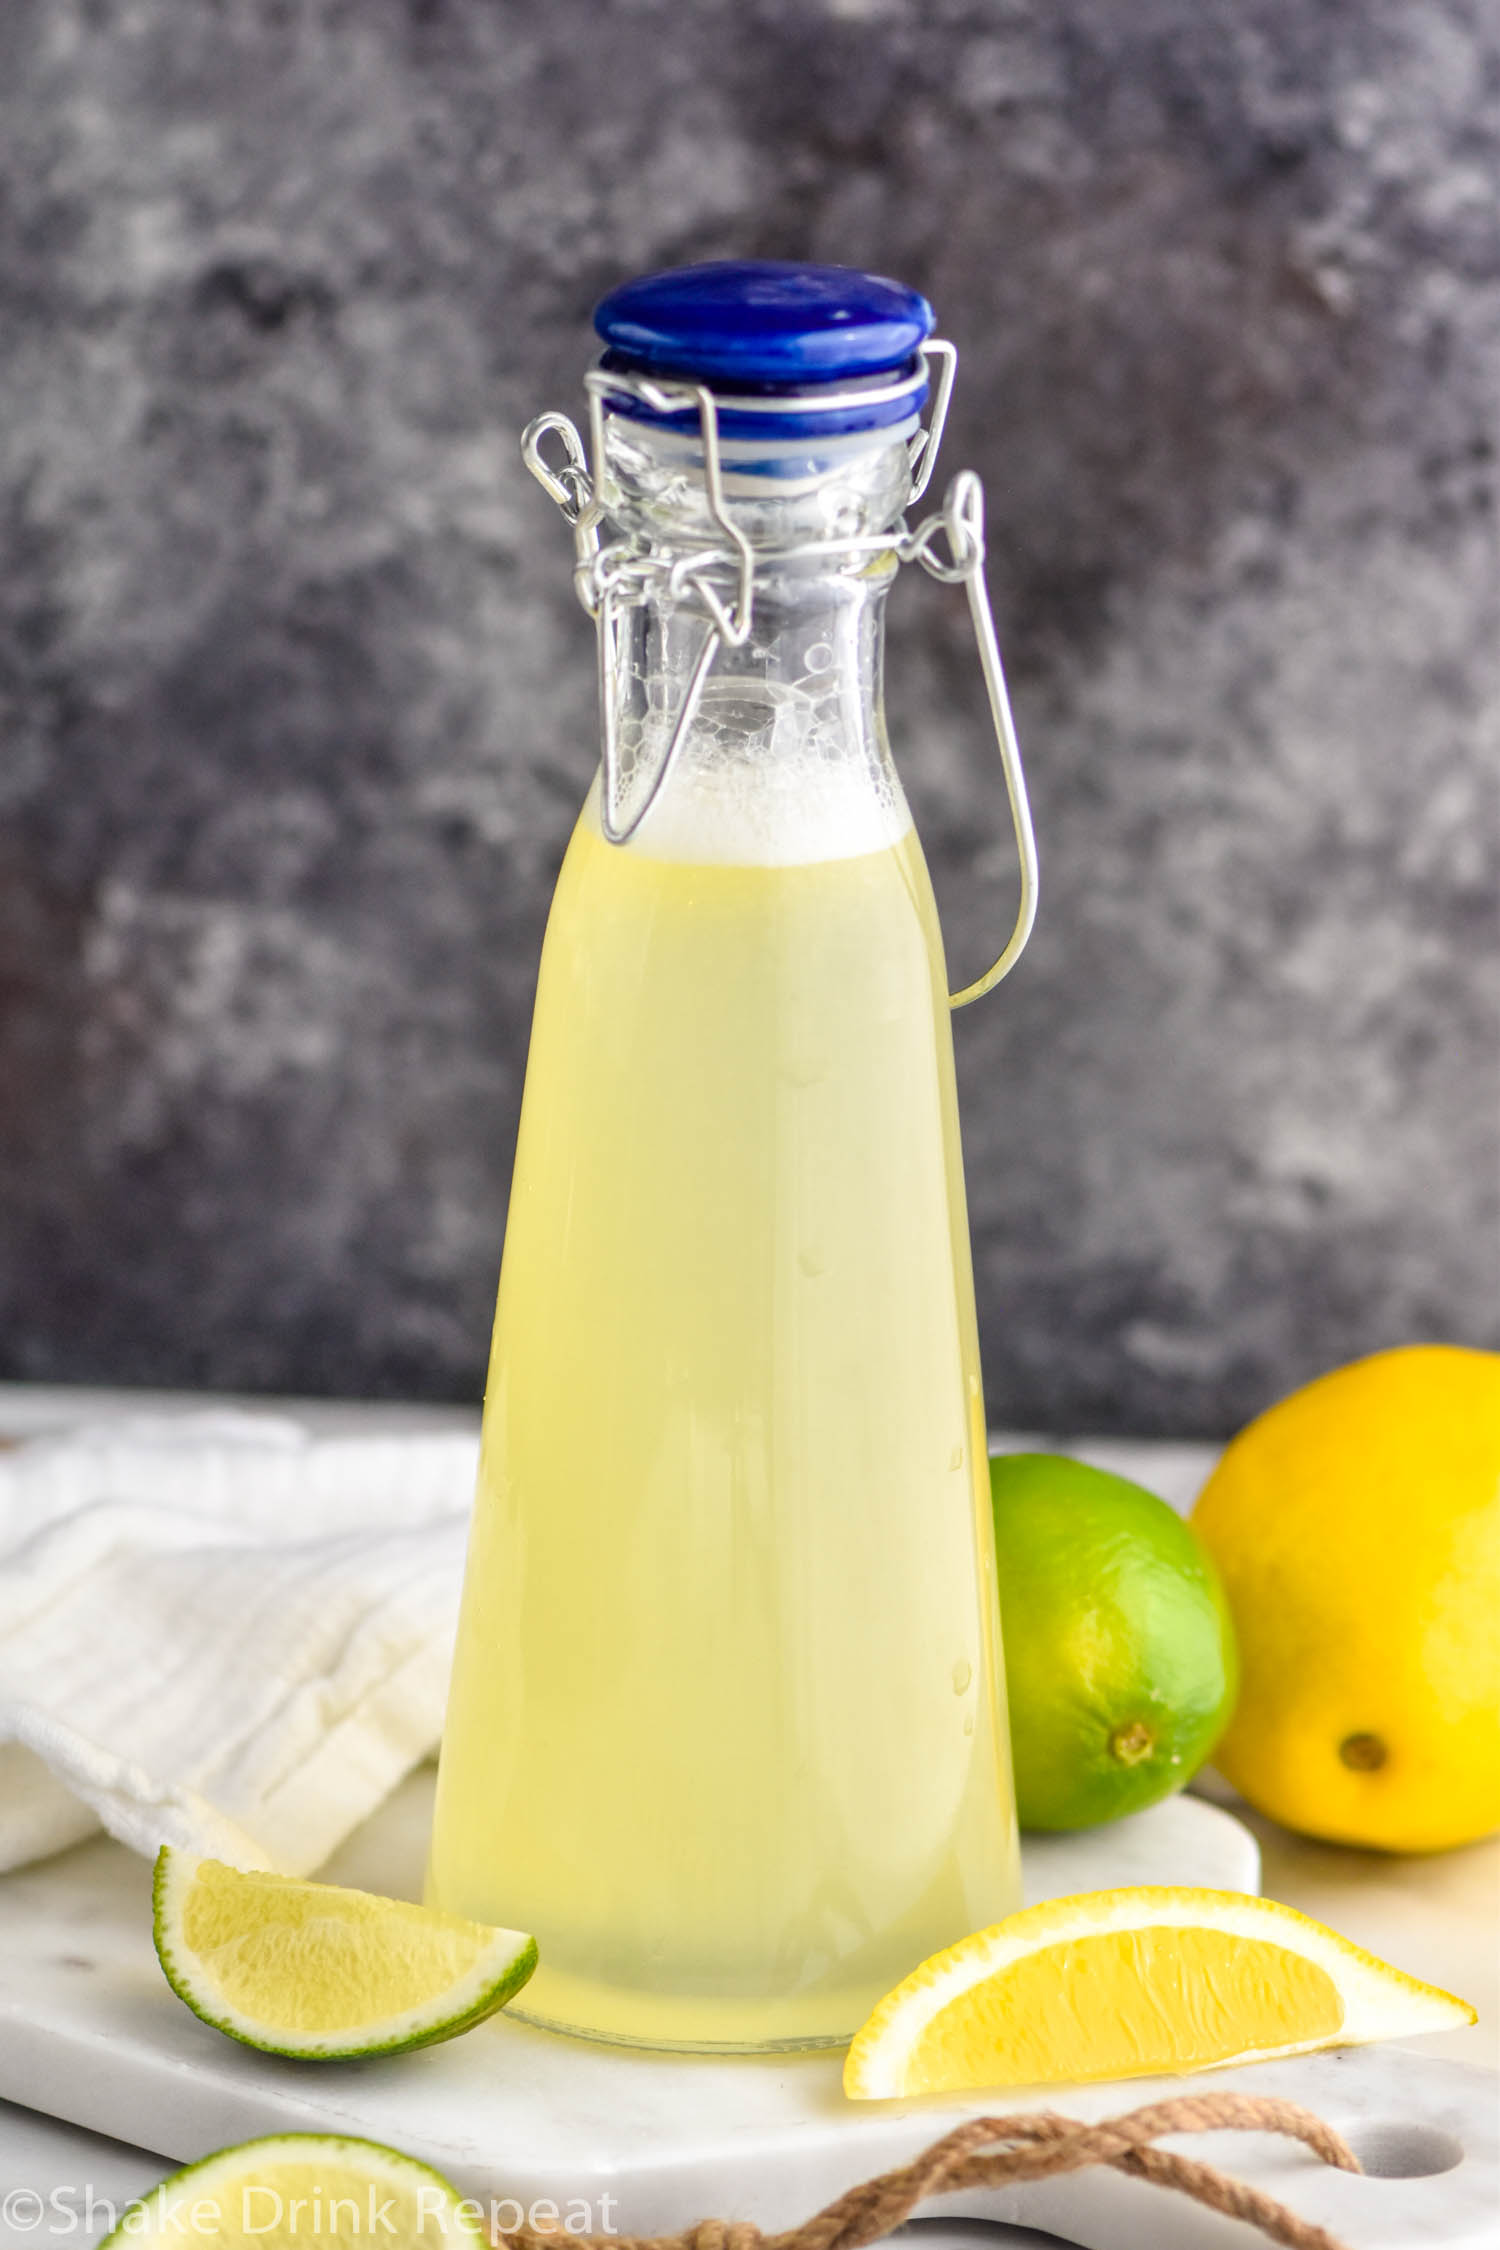 bottle of homemade margarita mix with fresh lemons and limes